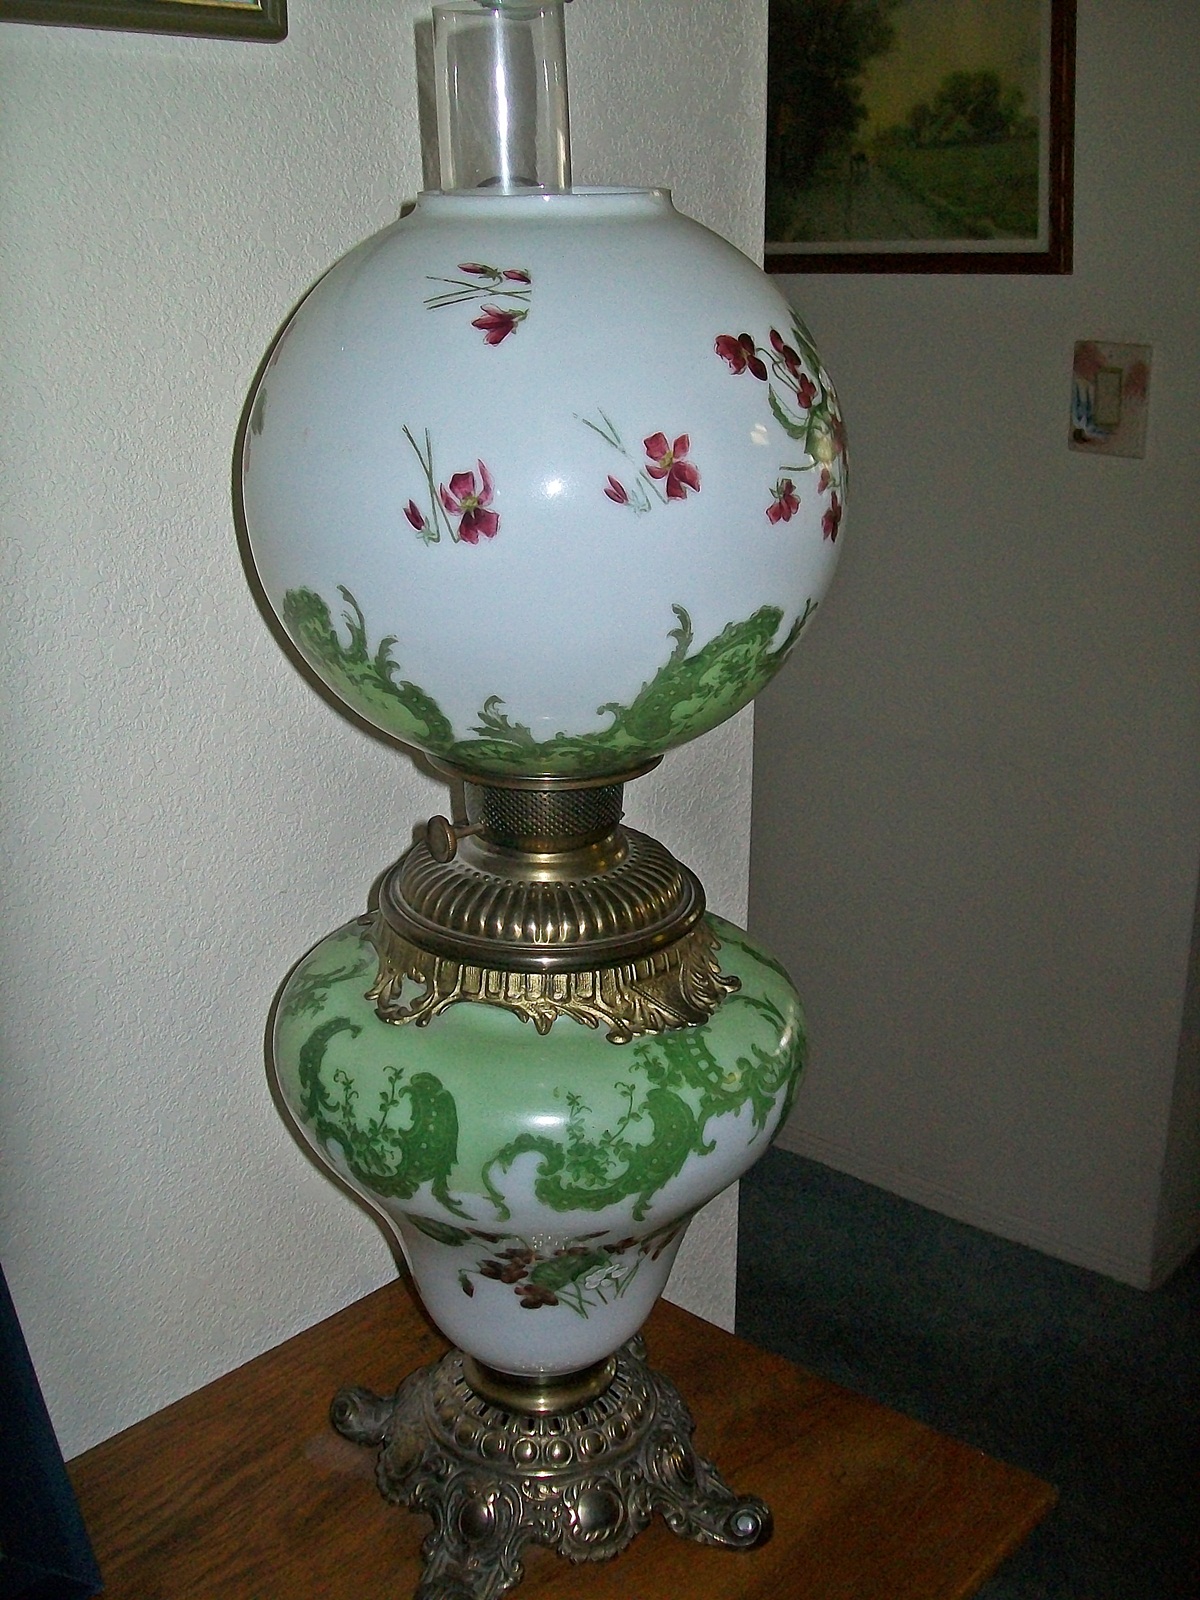 10 Benefits Of Antique Globe Lamps Warisan Lighting